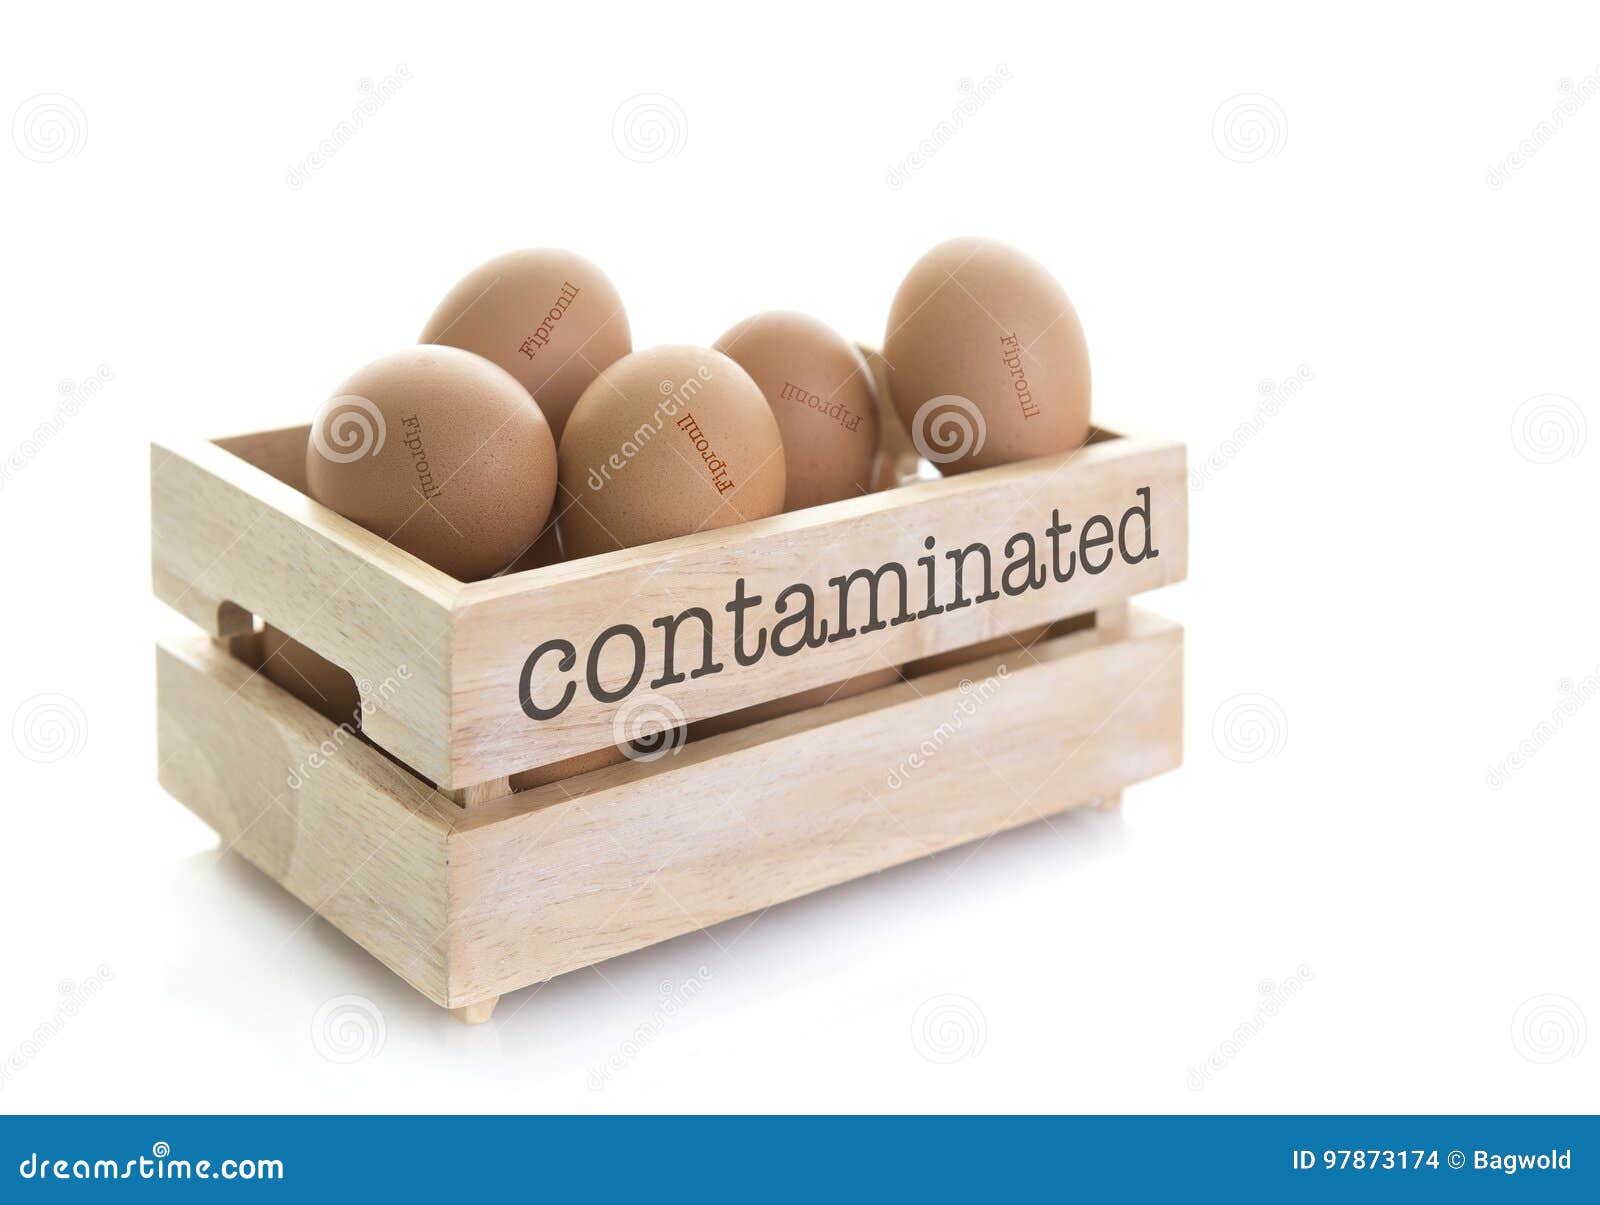 wooden egg box full of fipronil contaminated eggs